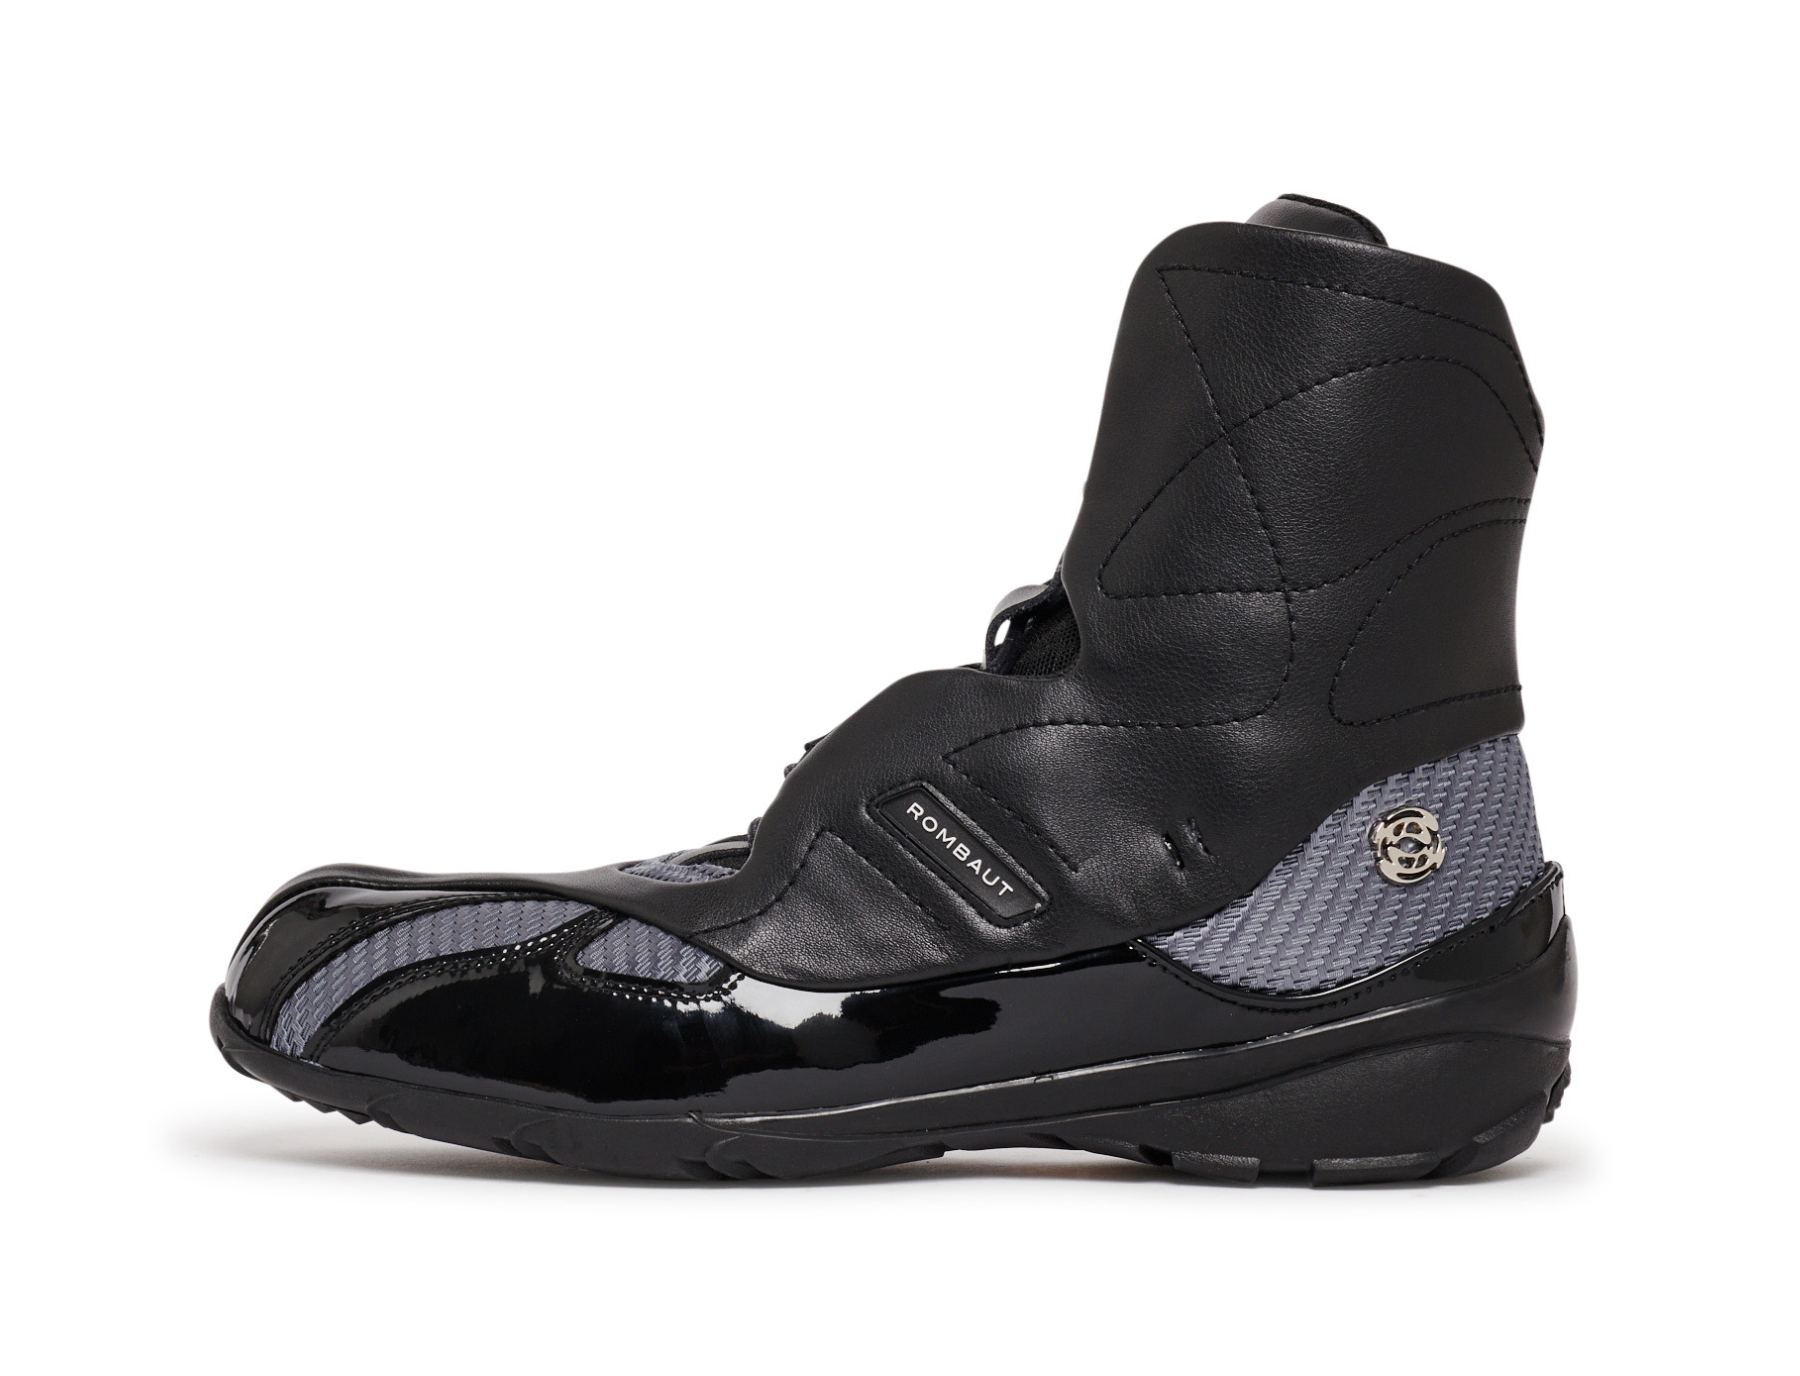 Rombaut SSENSE Exclusive Black Alien Barefoot Tall Boots